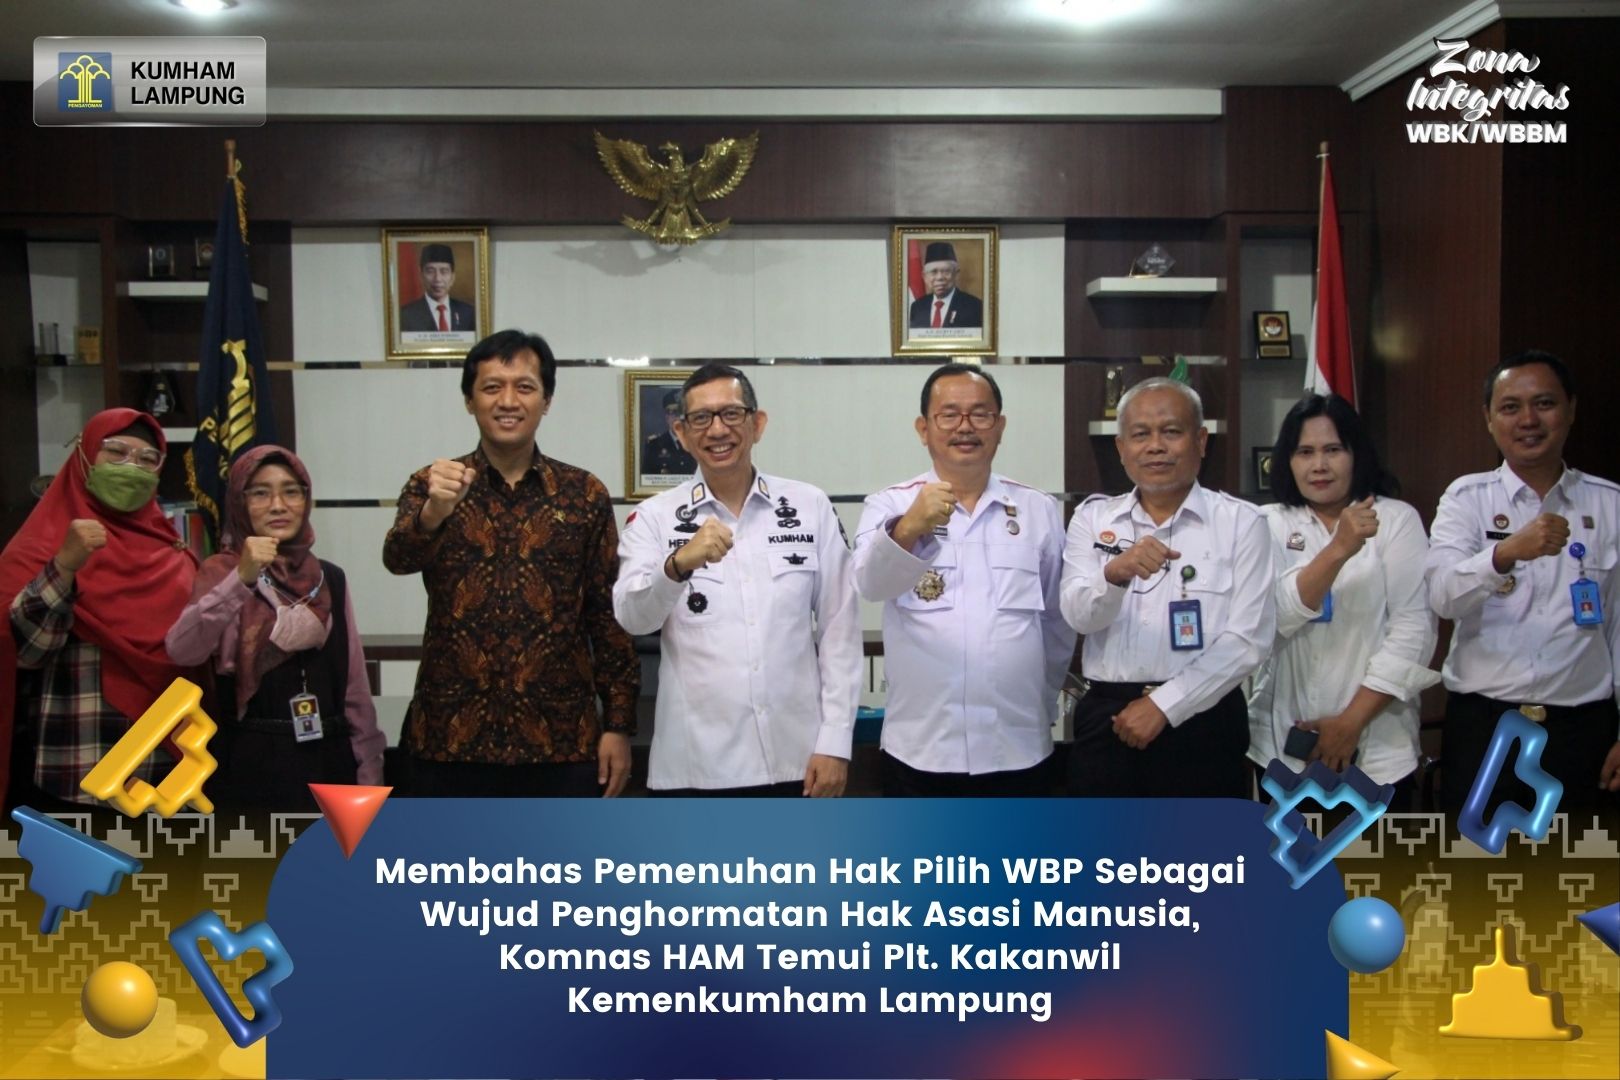 Membahas Pemenuhan Hak Pilih WBP Sebagai Wujud Penghormatan Hak Asasi Manusia, Komnas HAM Temui Plt.Kakanwil Kemenkumham Lampung